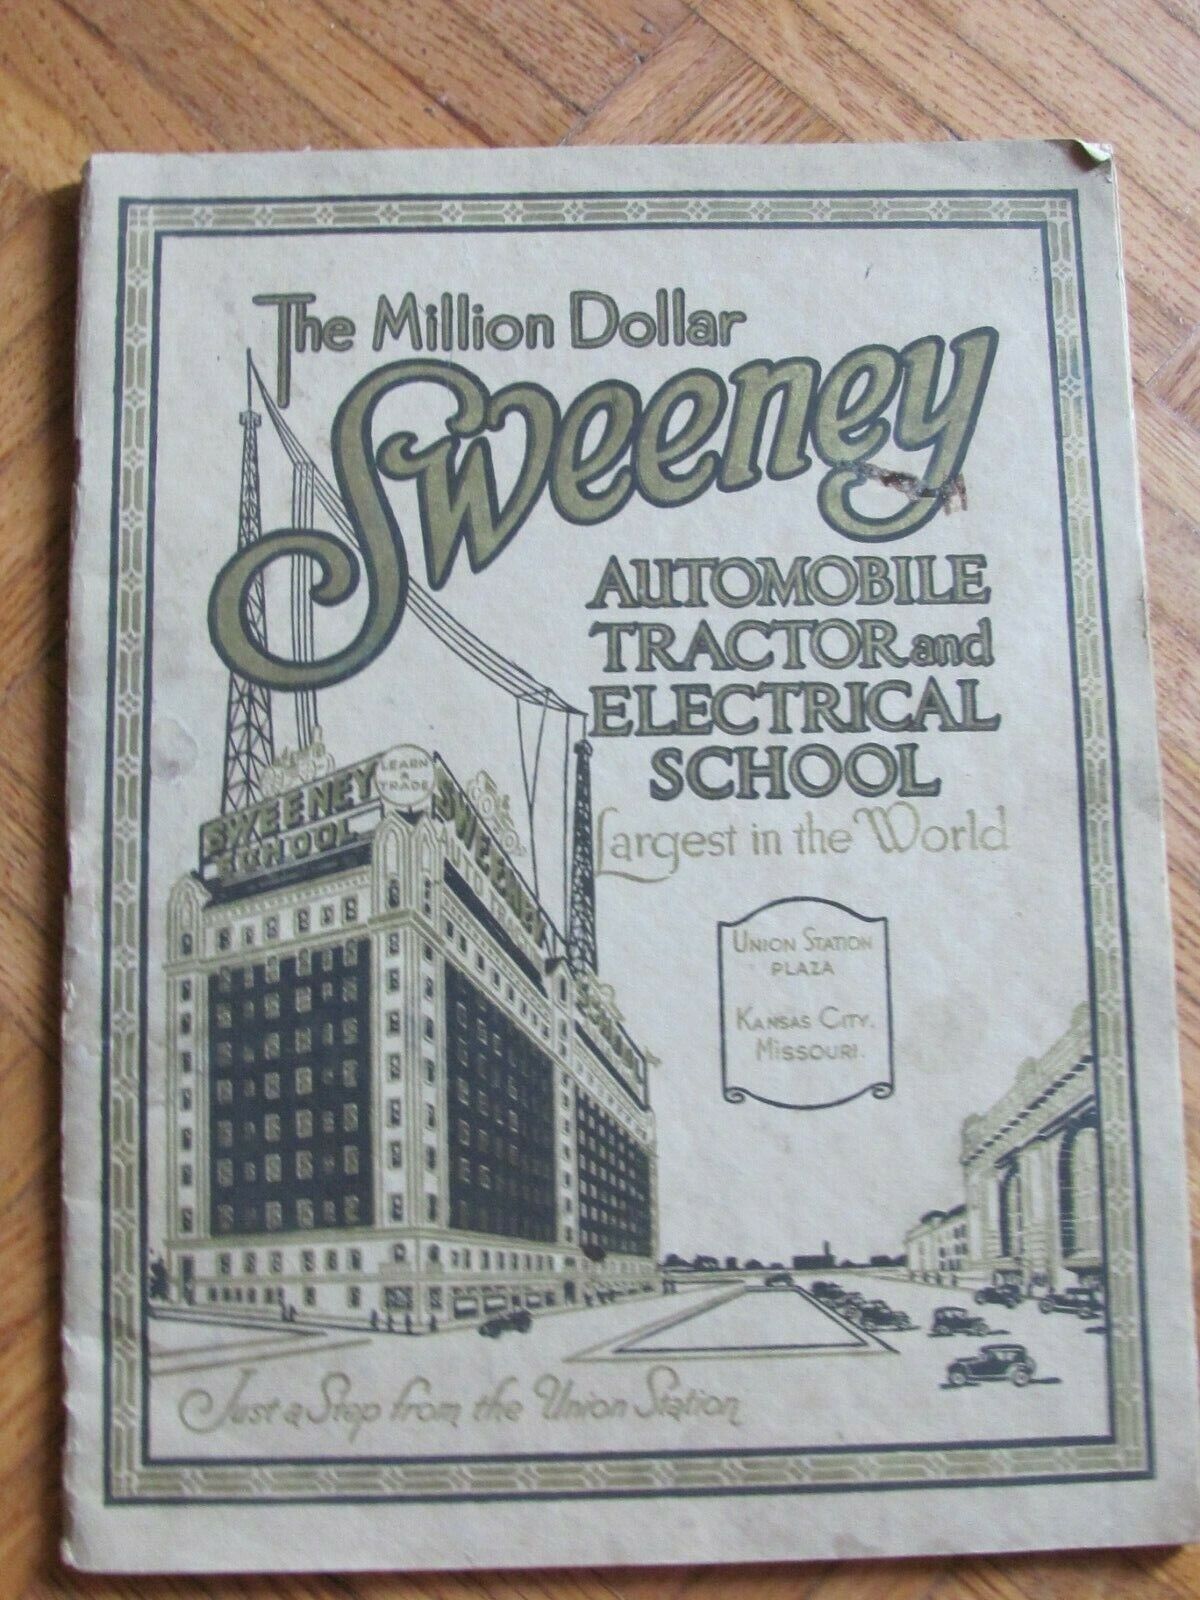 1923 SWEENEY AUTOMOBILE TRACTOR ELECTRICAL SCHOOL KANSAS CITY INFO BOOK 